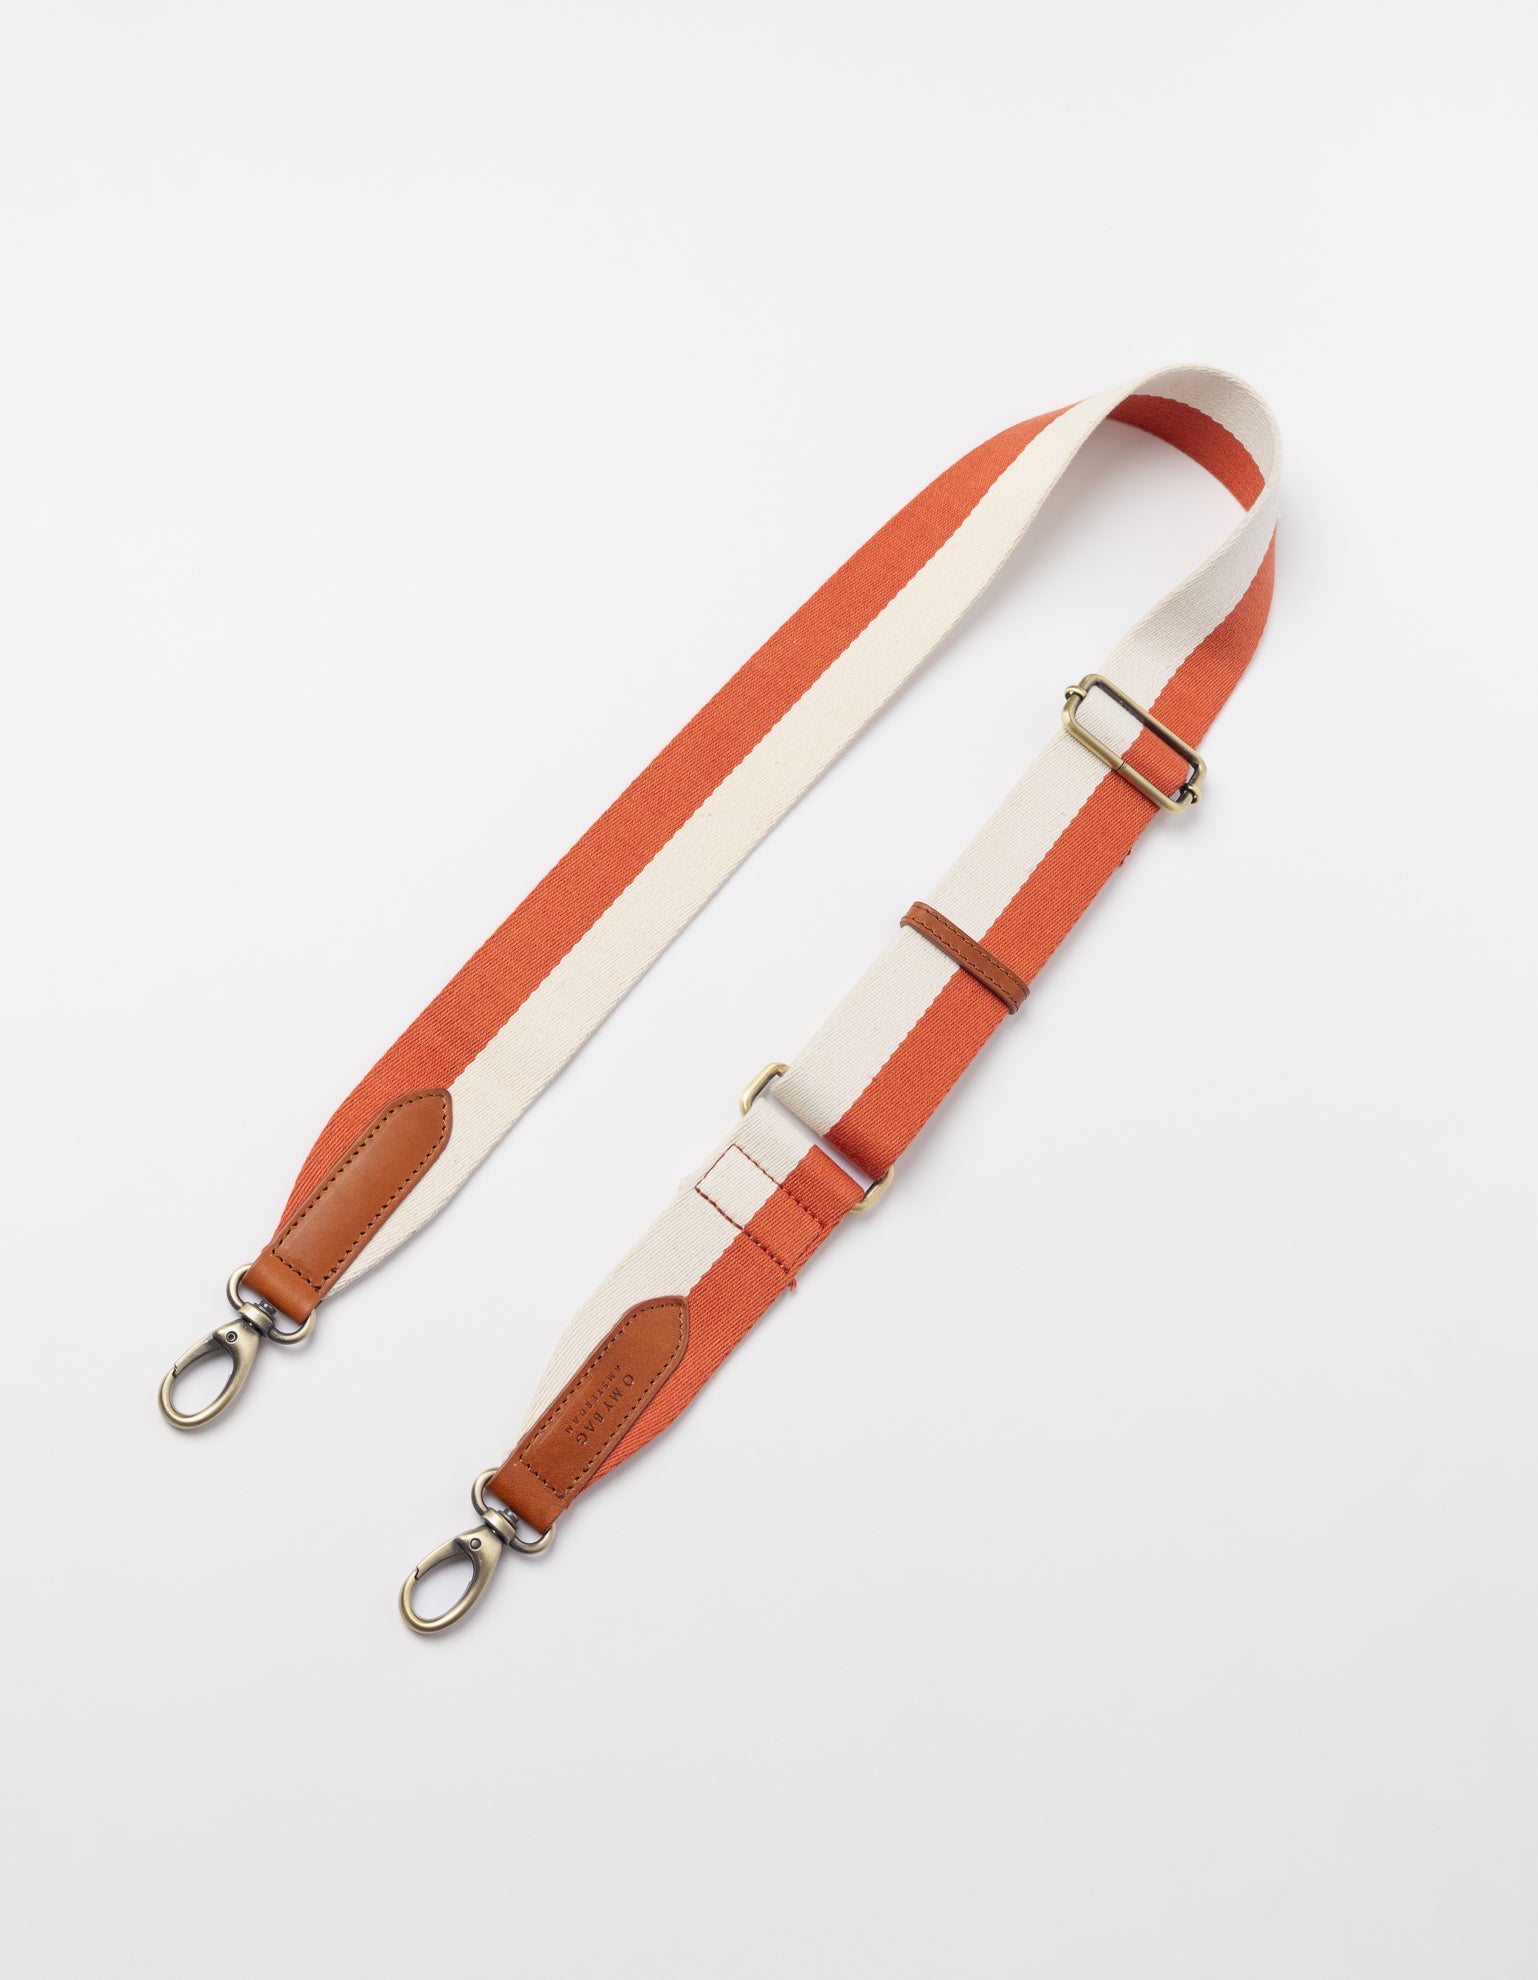 Striped Webbing Strap - Copper & White / Cognac Classic Leather